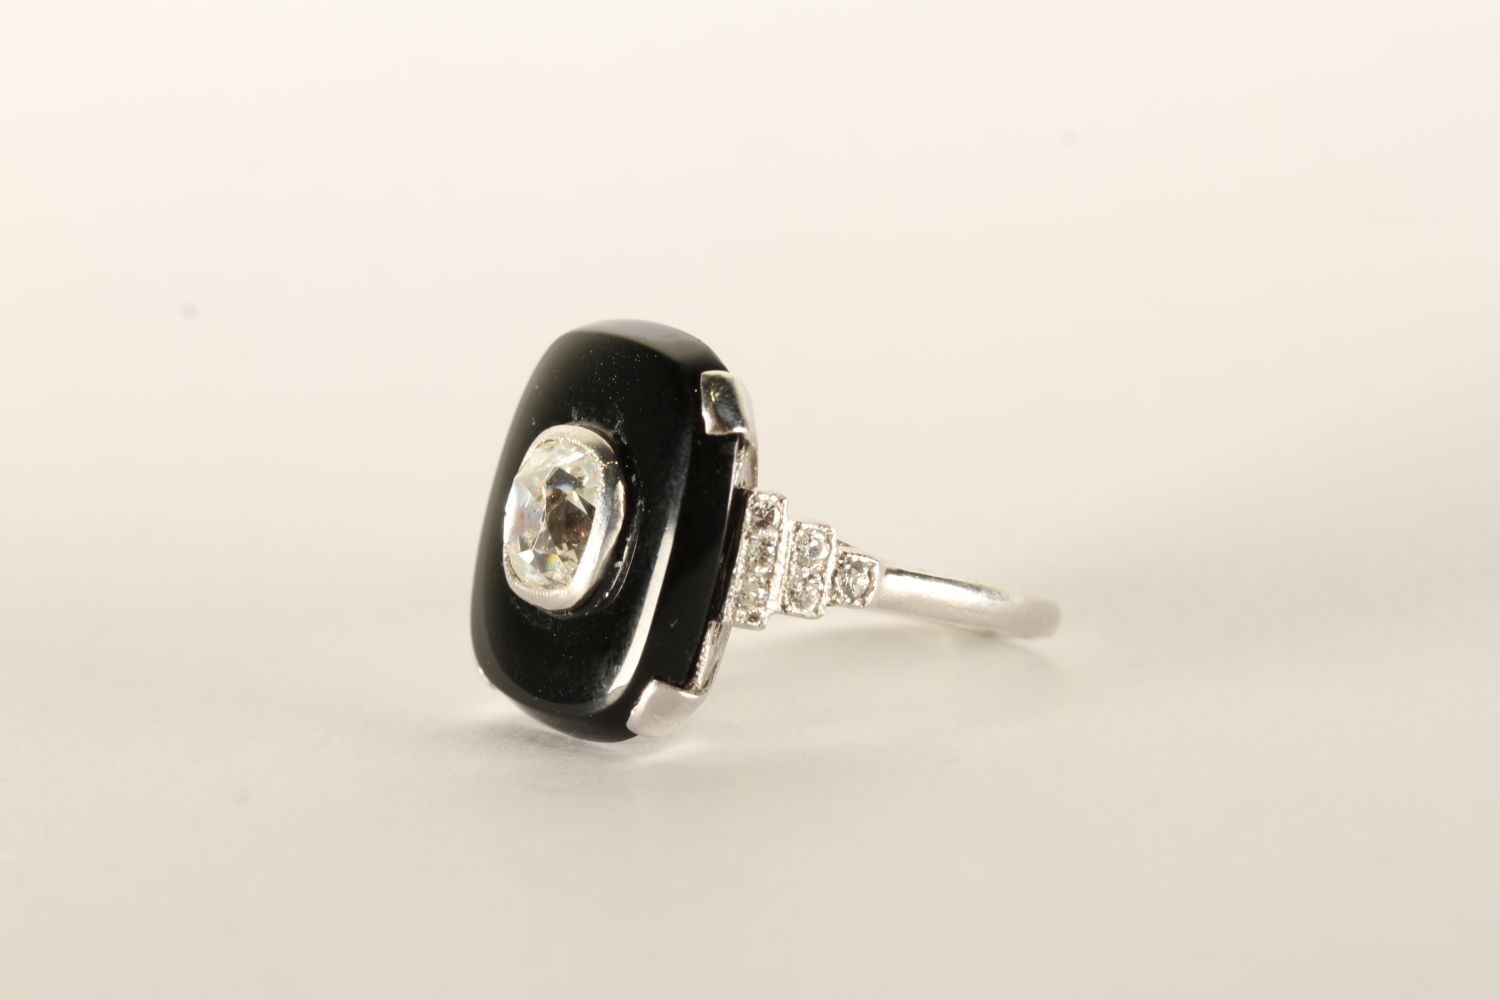 Art Deco Onyx And Diamond Dress Ring, feature cushion cut diamond, estimated weight 1.22ct, set - Image 2 of 3